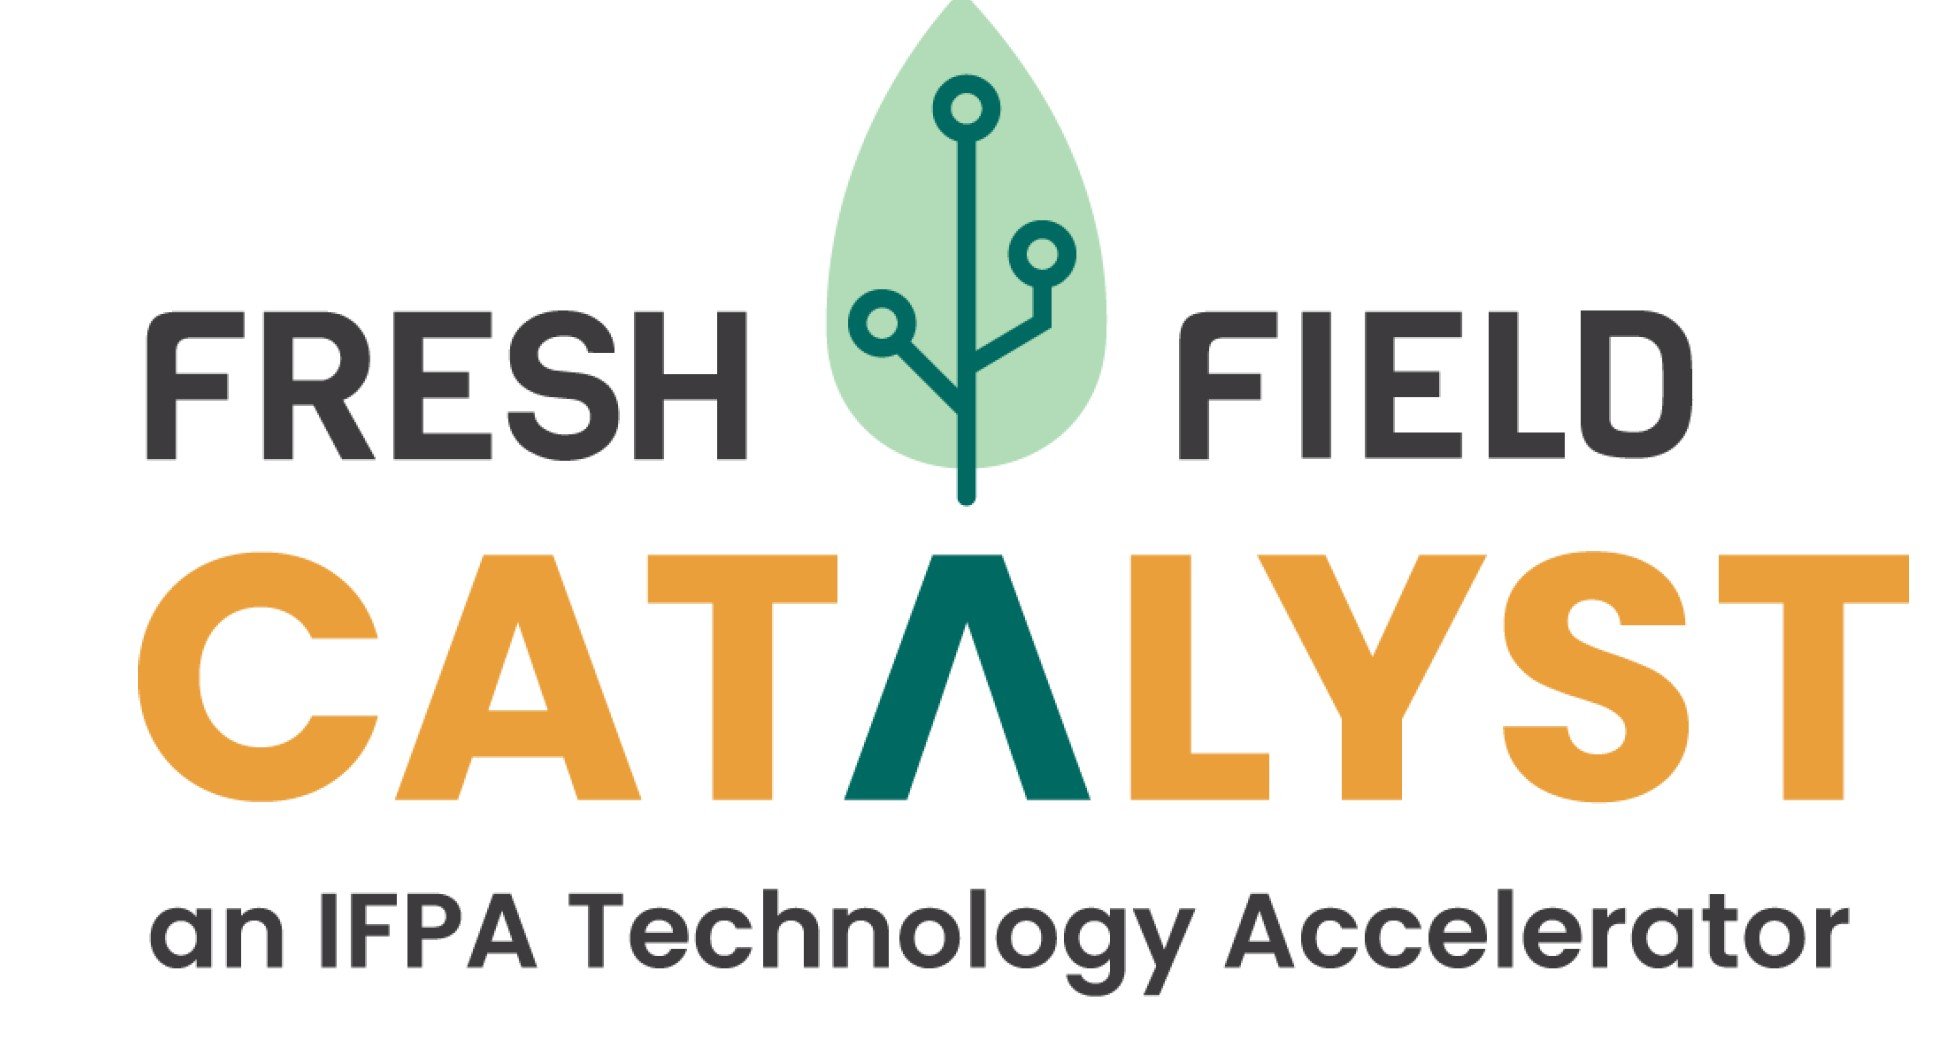 Fresh Field Catalyst logo.jpg